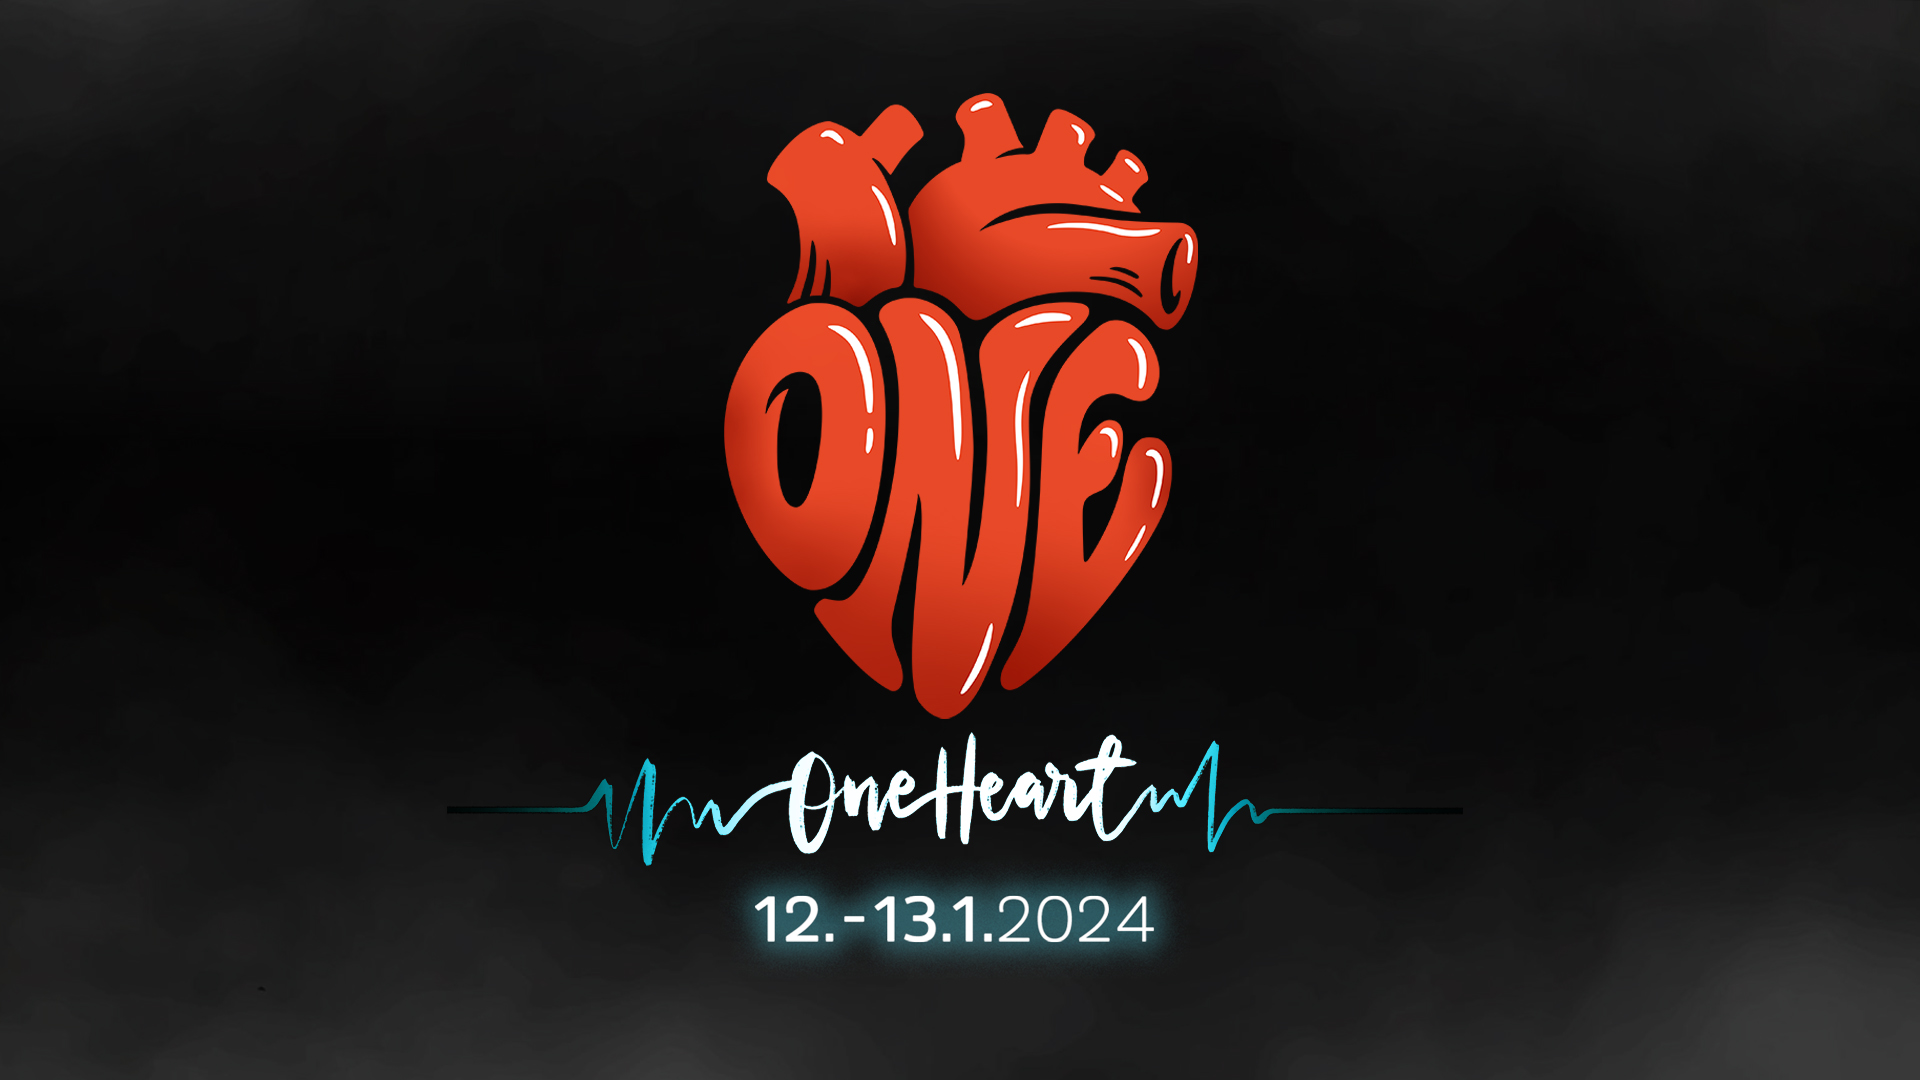 OneHeart: Q & A